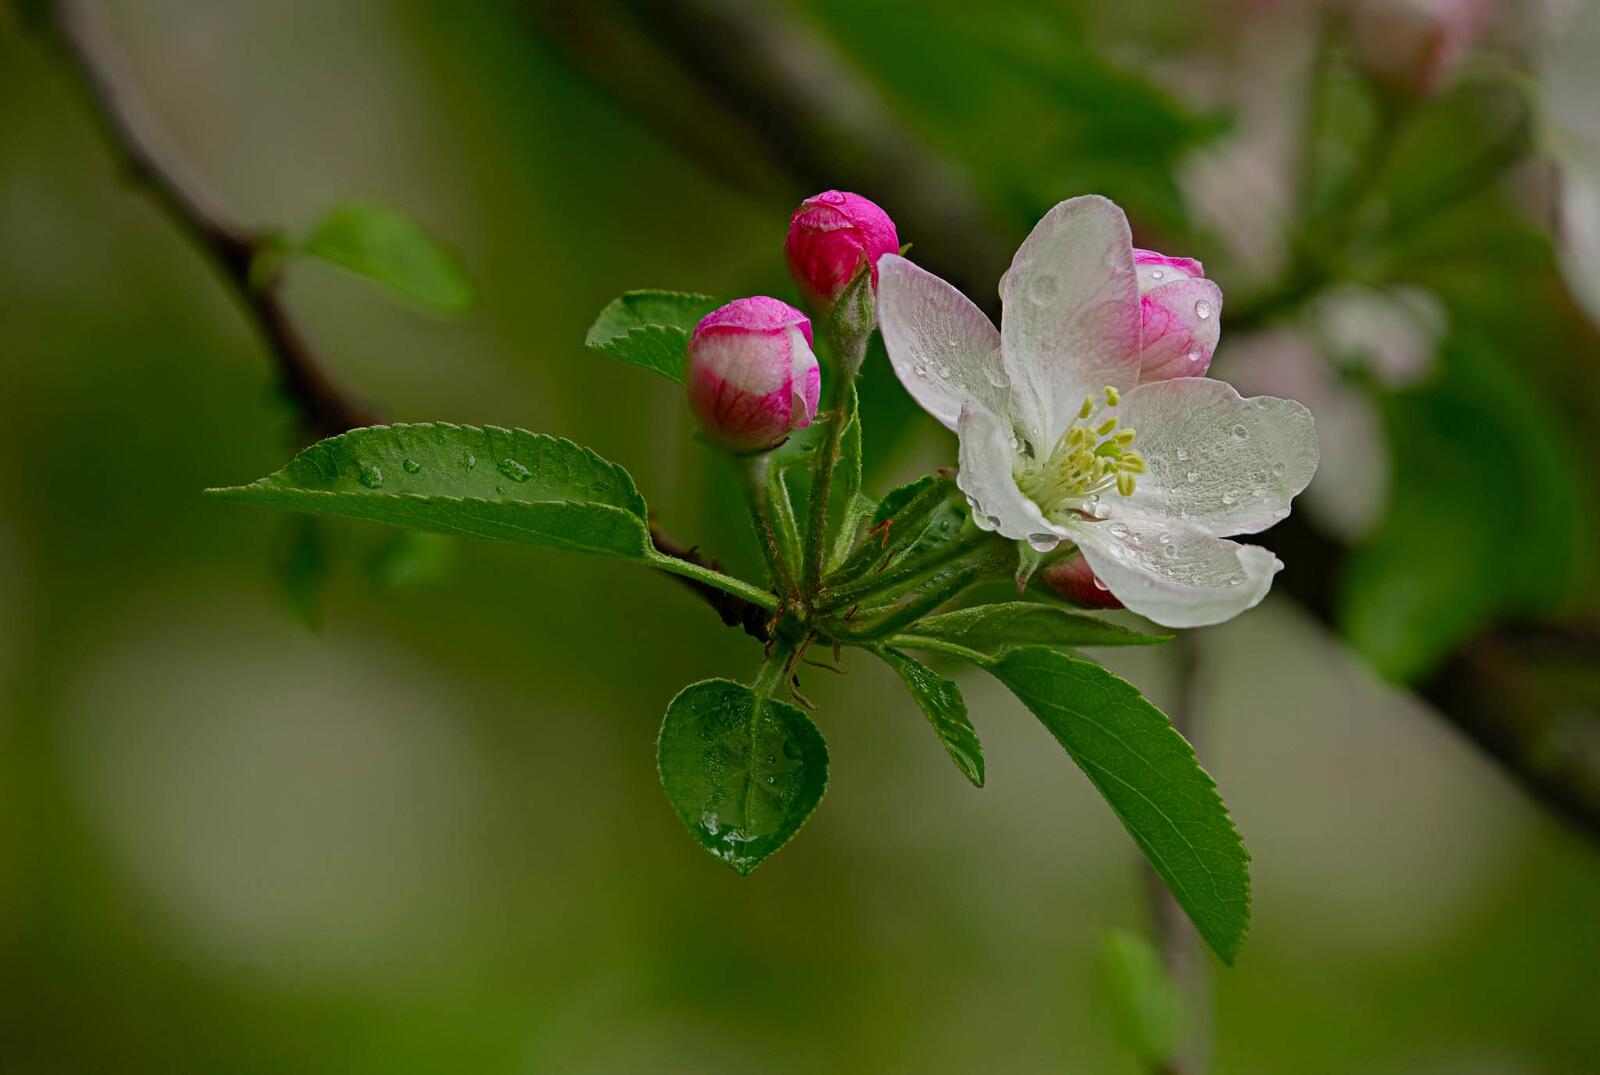 Wallpapers apple tree flowering branch spring on the desktop